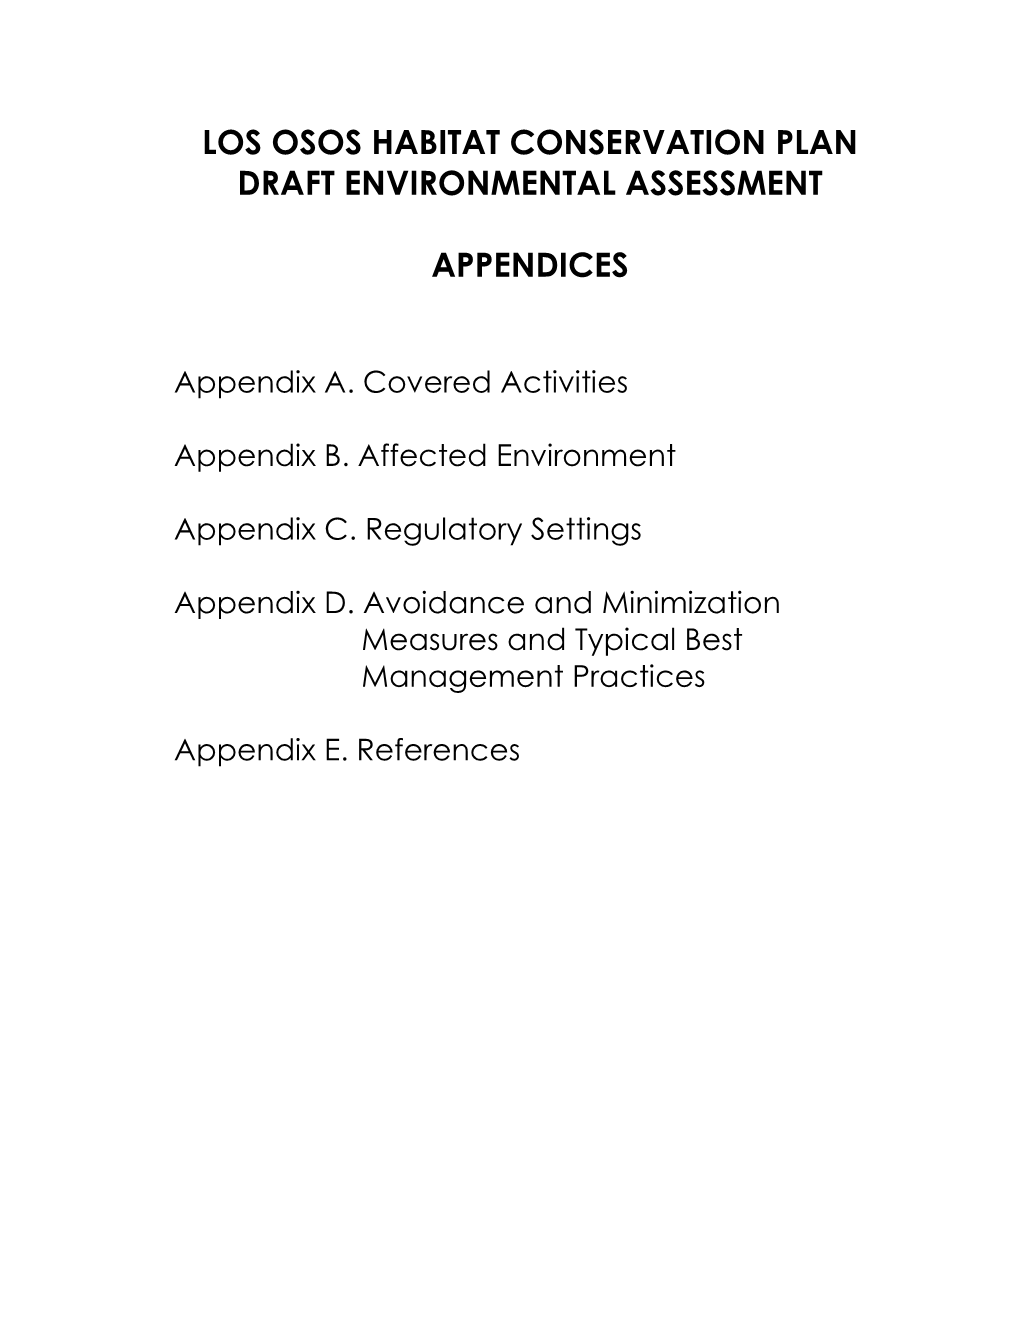 Los Osos Habitat Conservation Plan Draft Environmental Assessment